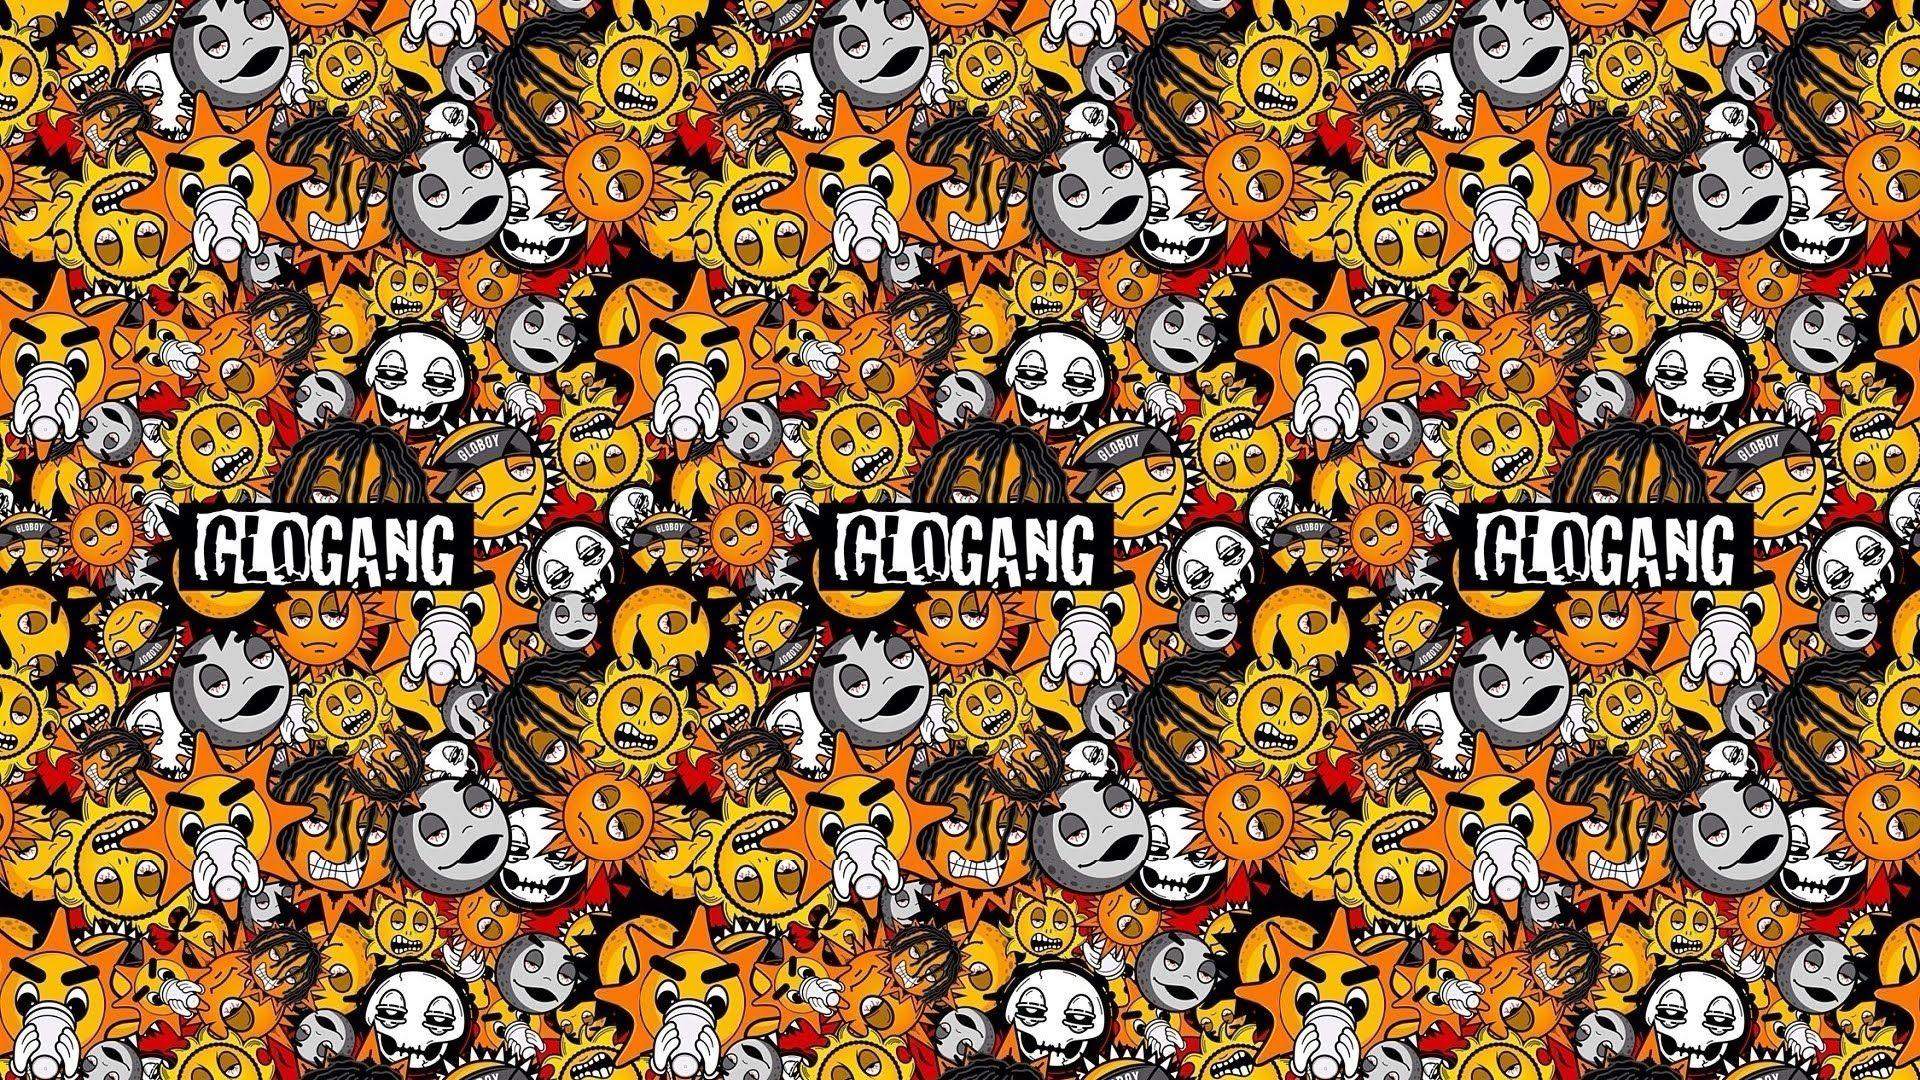 Glo Gang Chief Keef Emojis